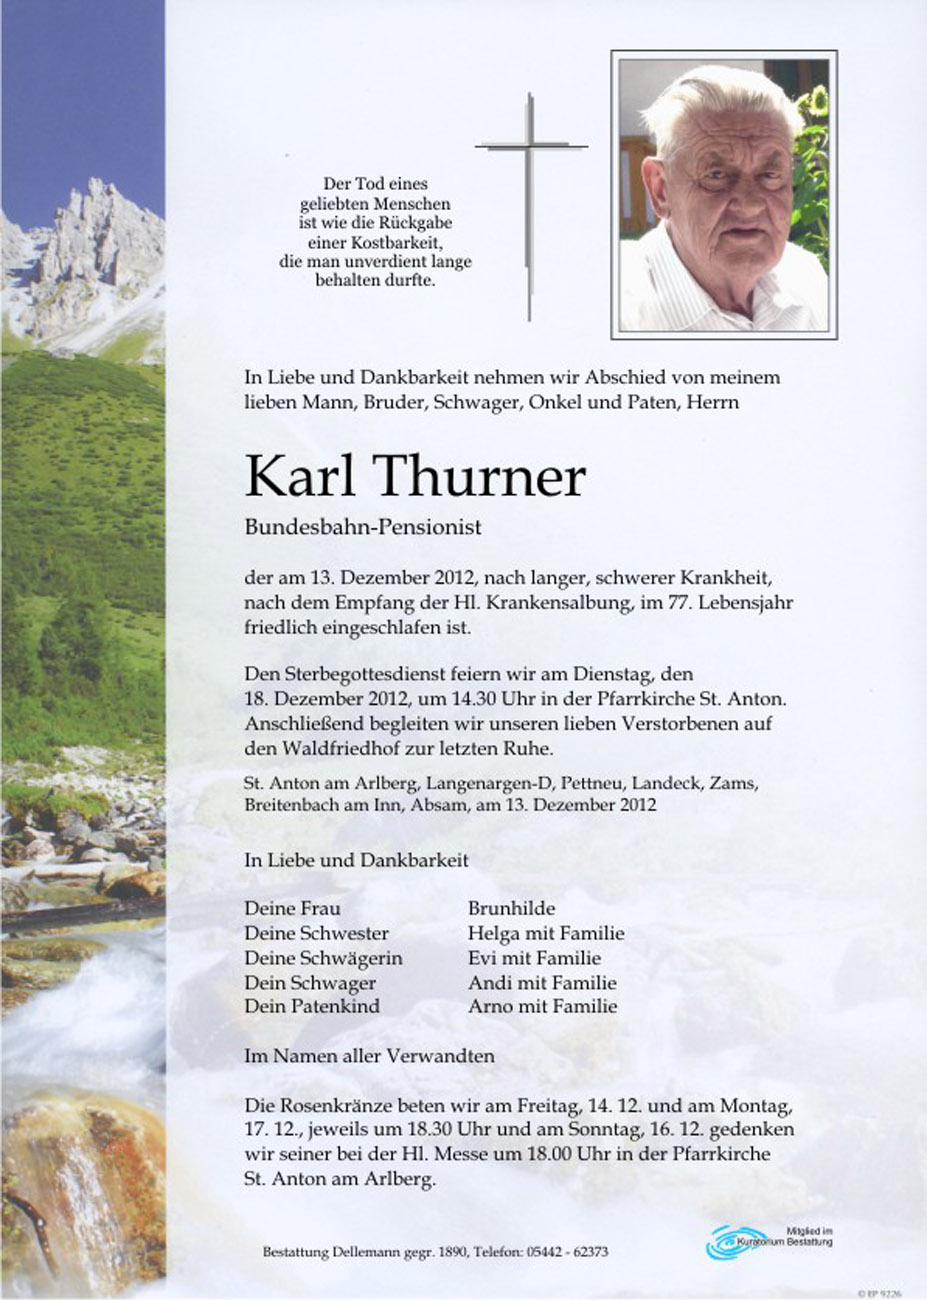   Karl Thurner